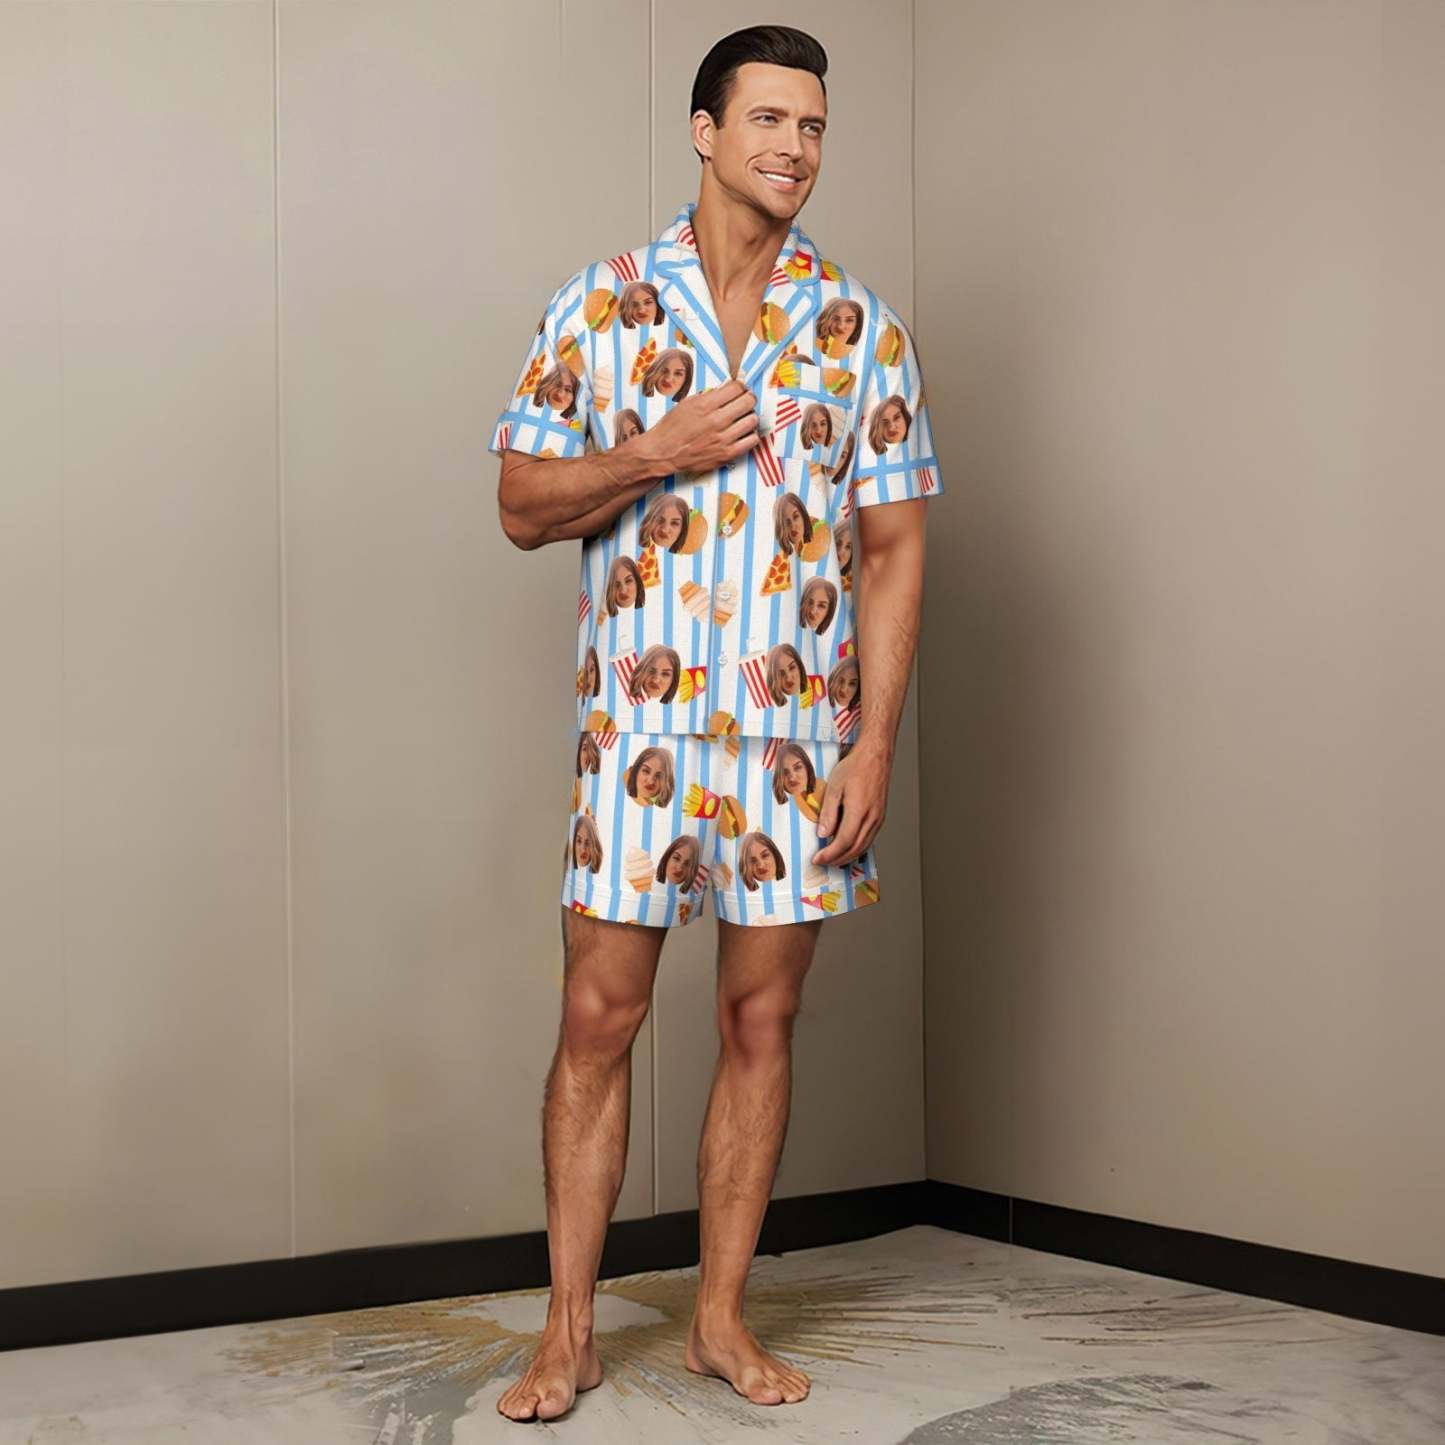 Custom Face Short Sleeved Pajamas Personalised Photo Sleepwear Holiday Gifts